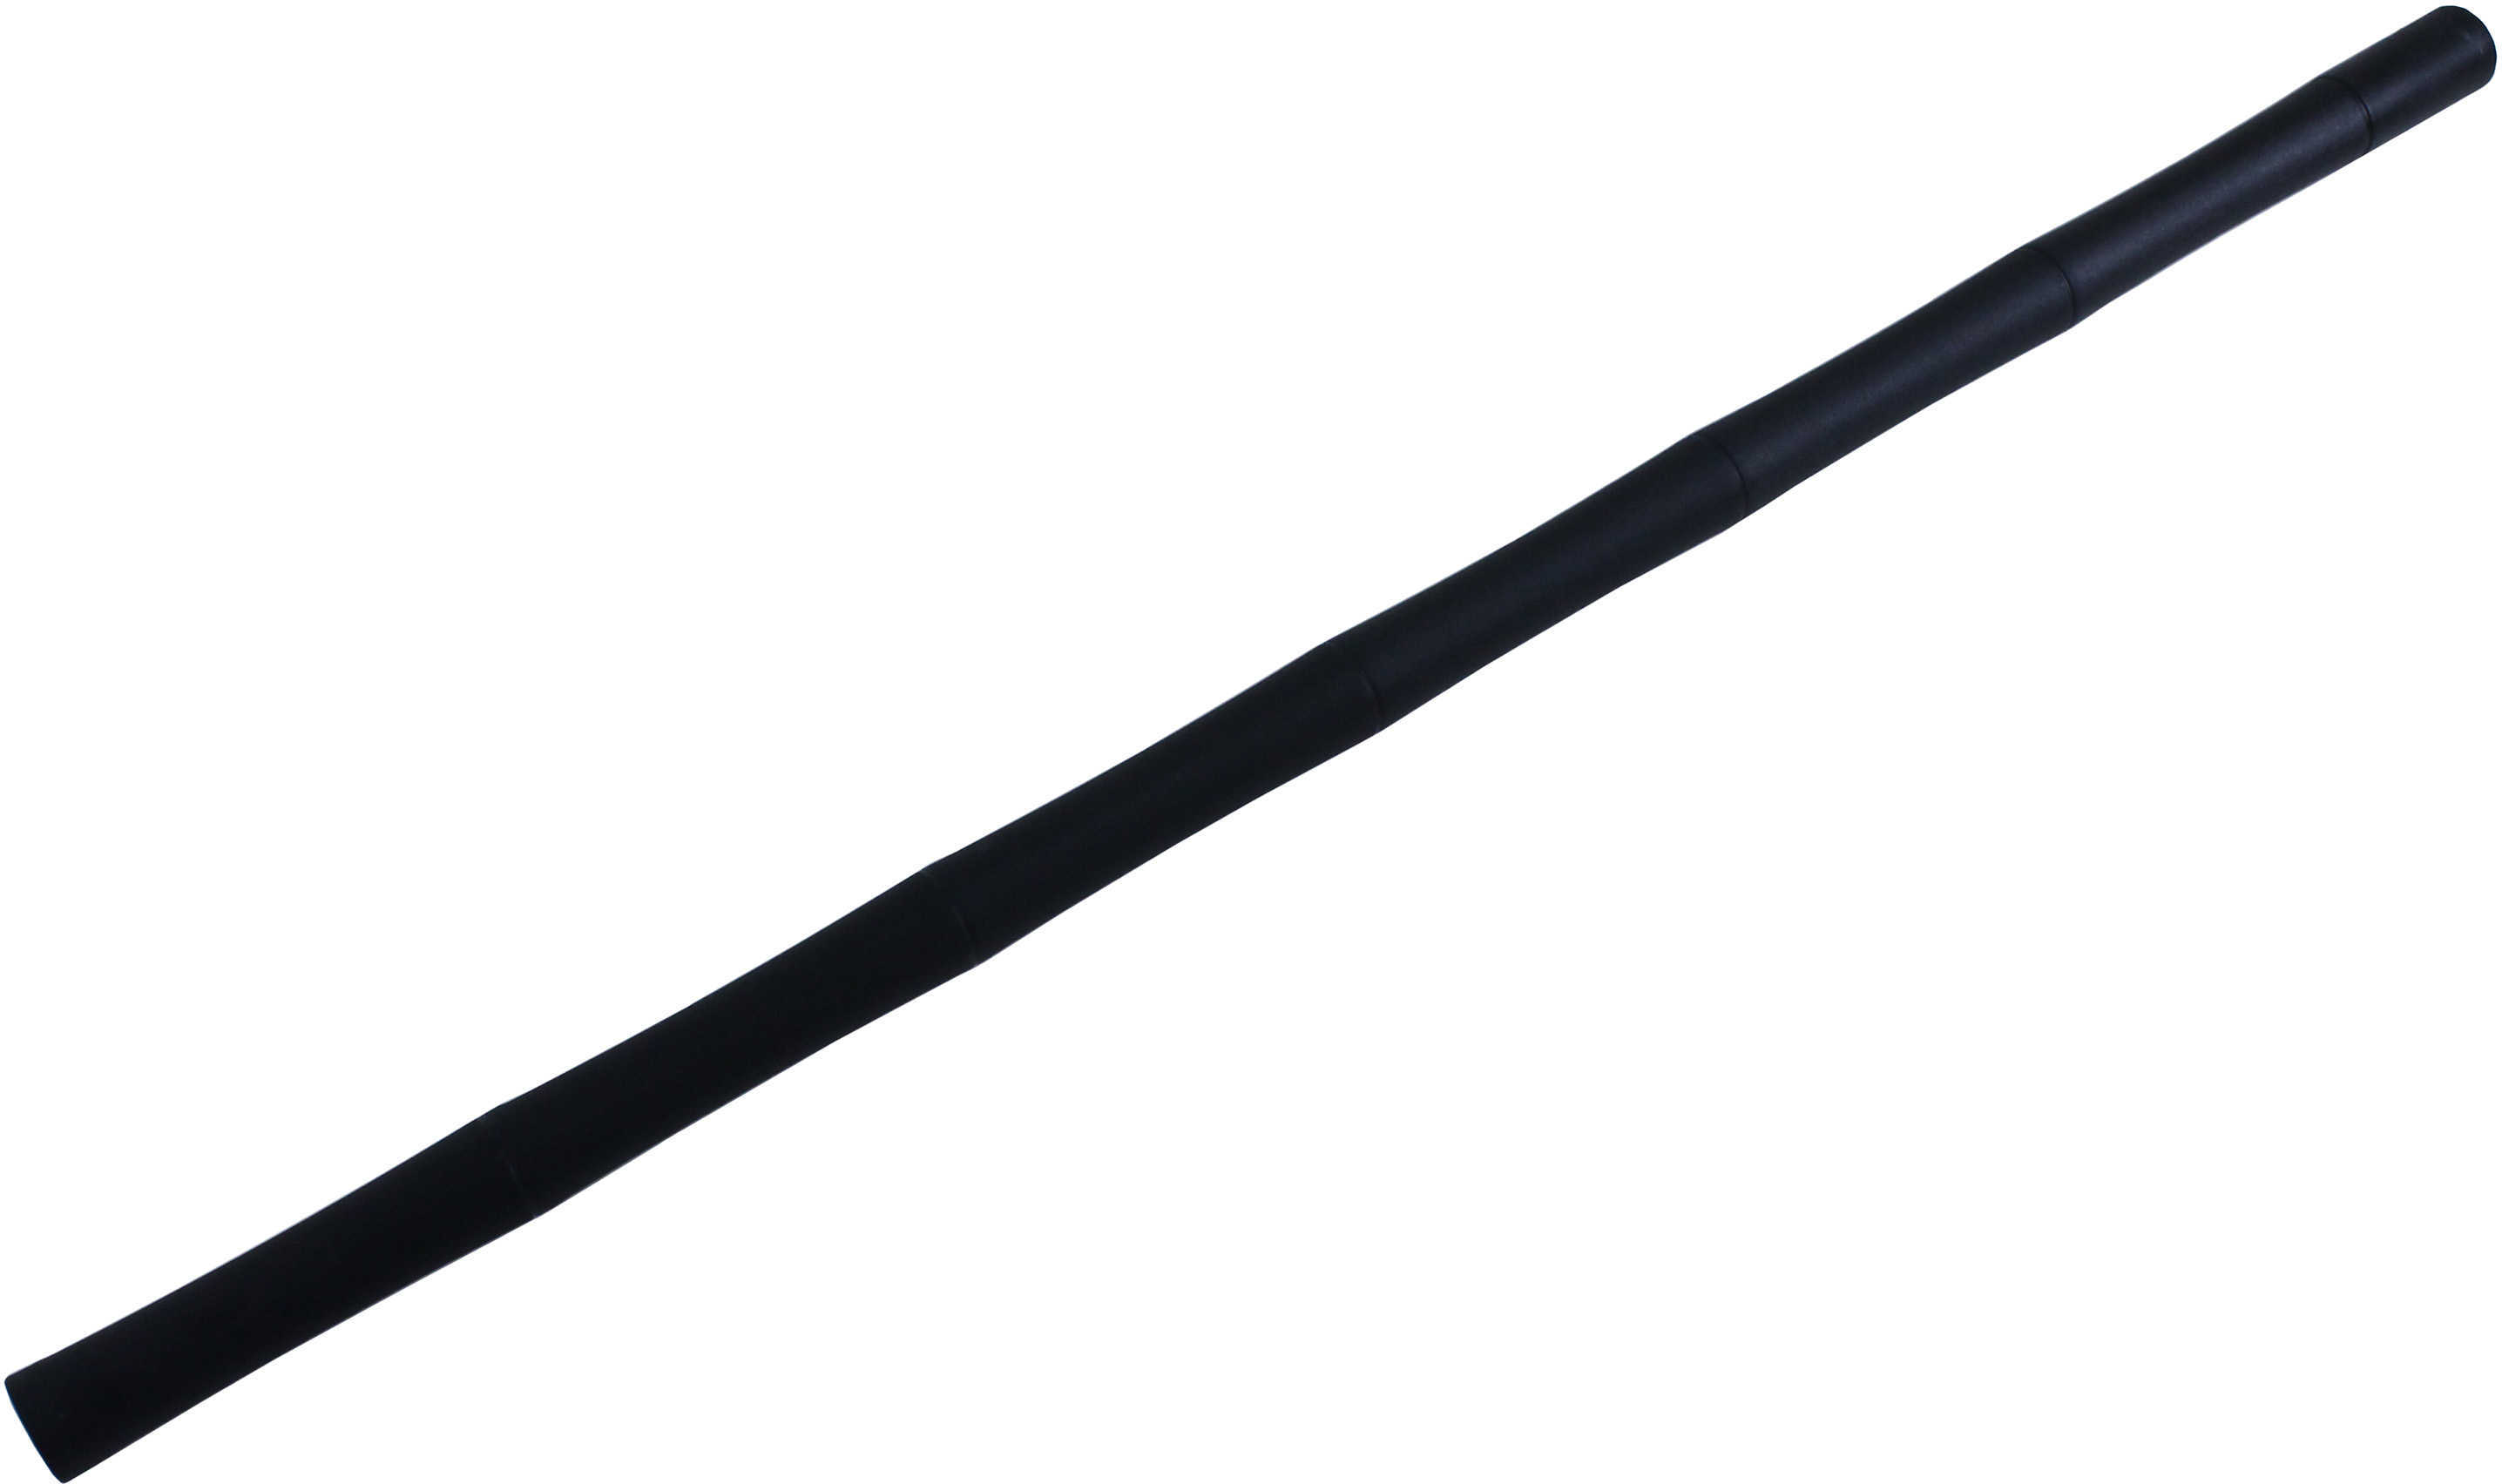 Cold Steel Escrima Stick 32.50 in Overall Length